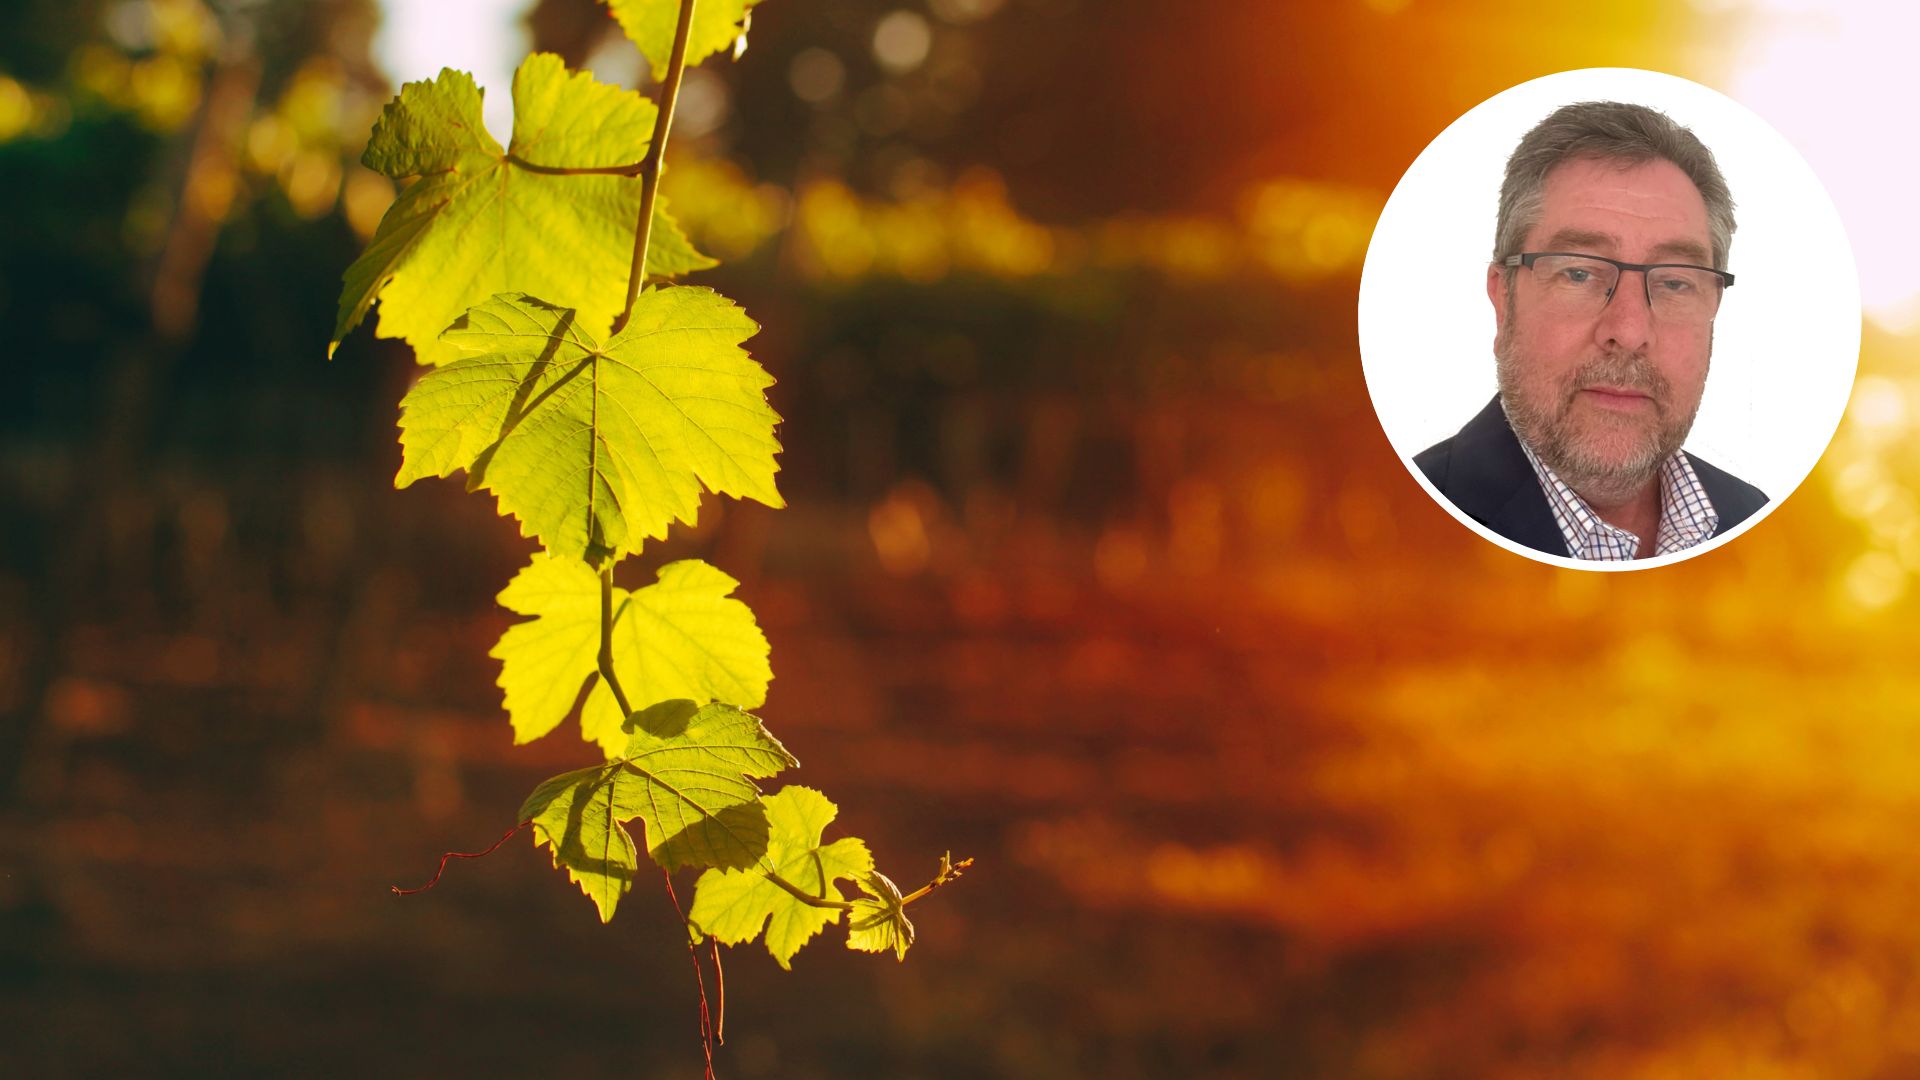 Wine expert joins Charles Sturt to grow industry partnerships 